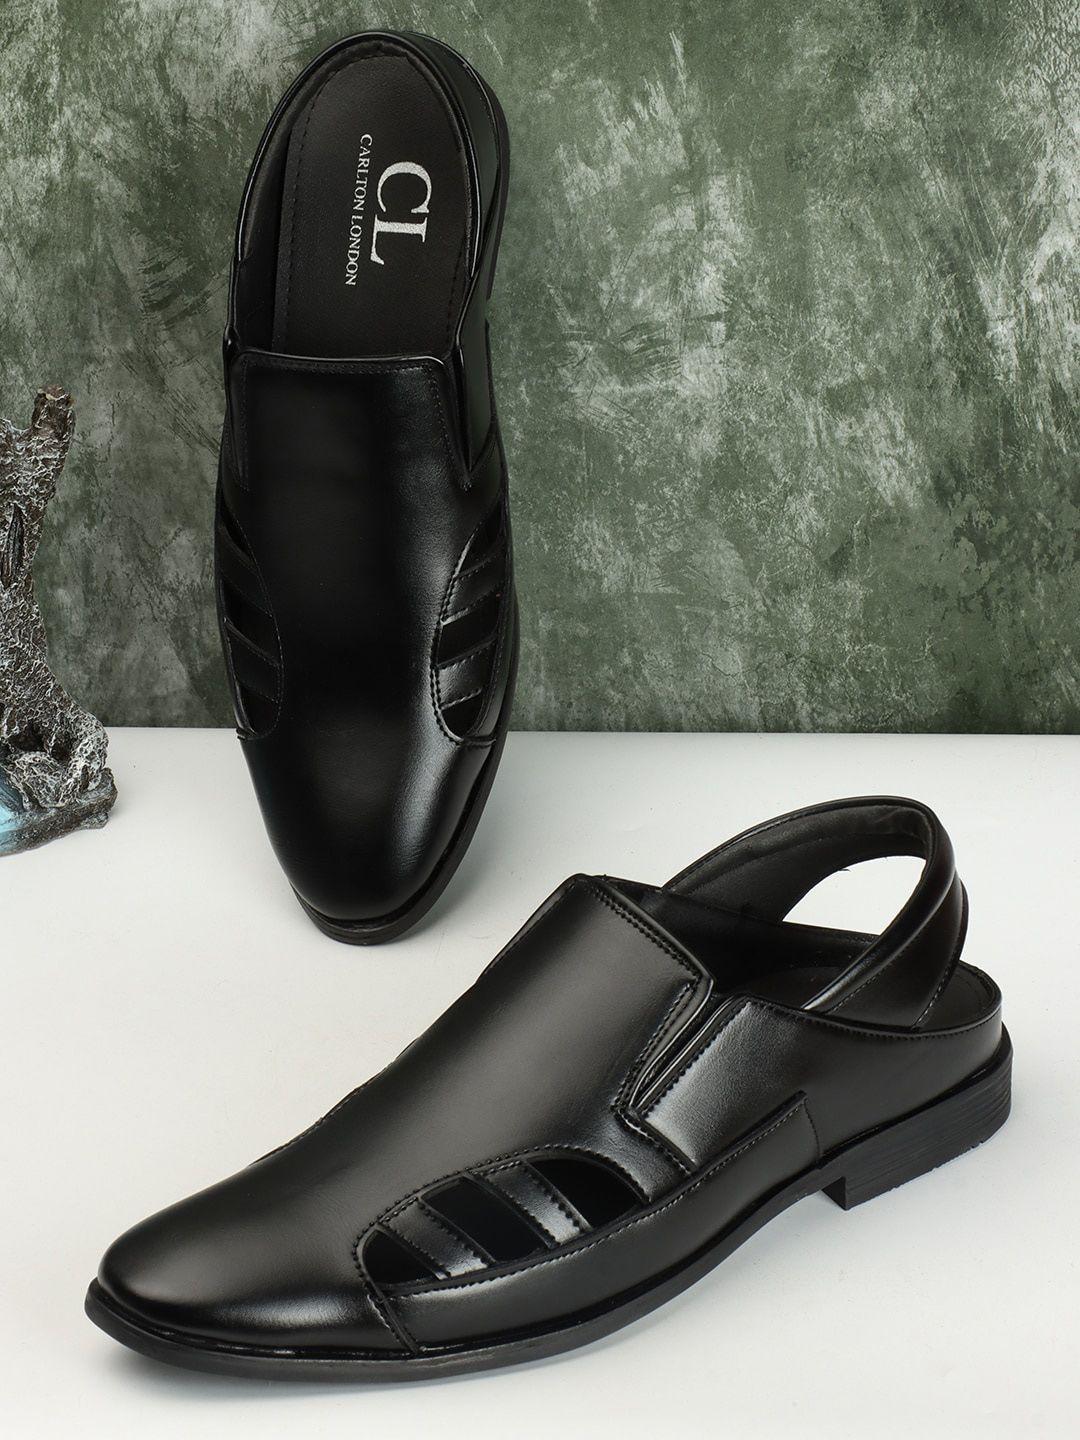 carlton london men laser cut shoe-style sandals with backstrap